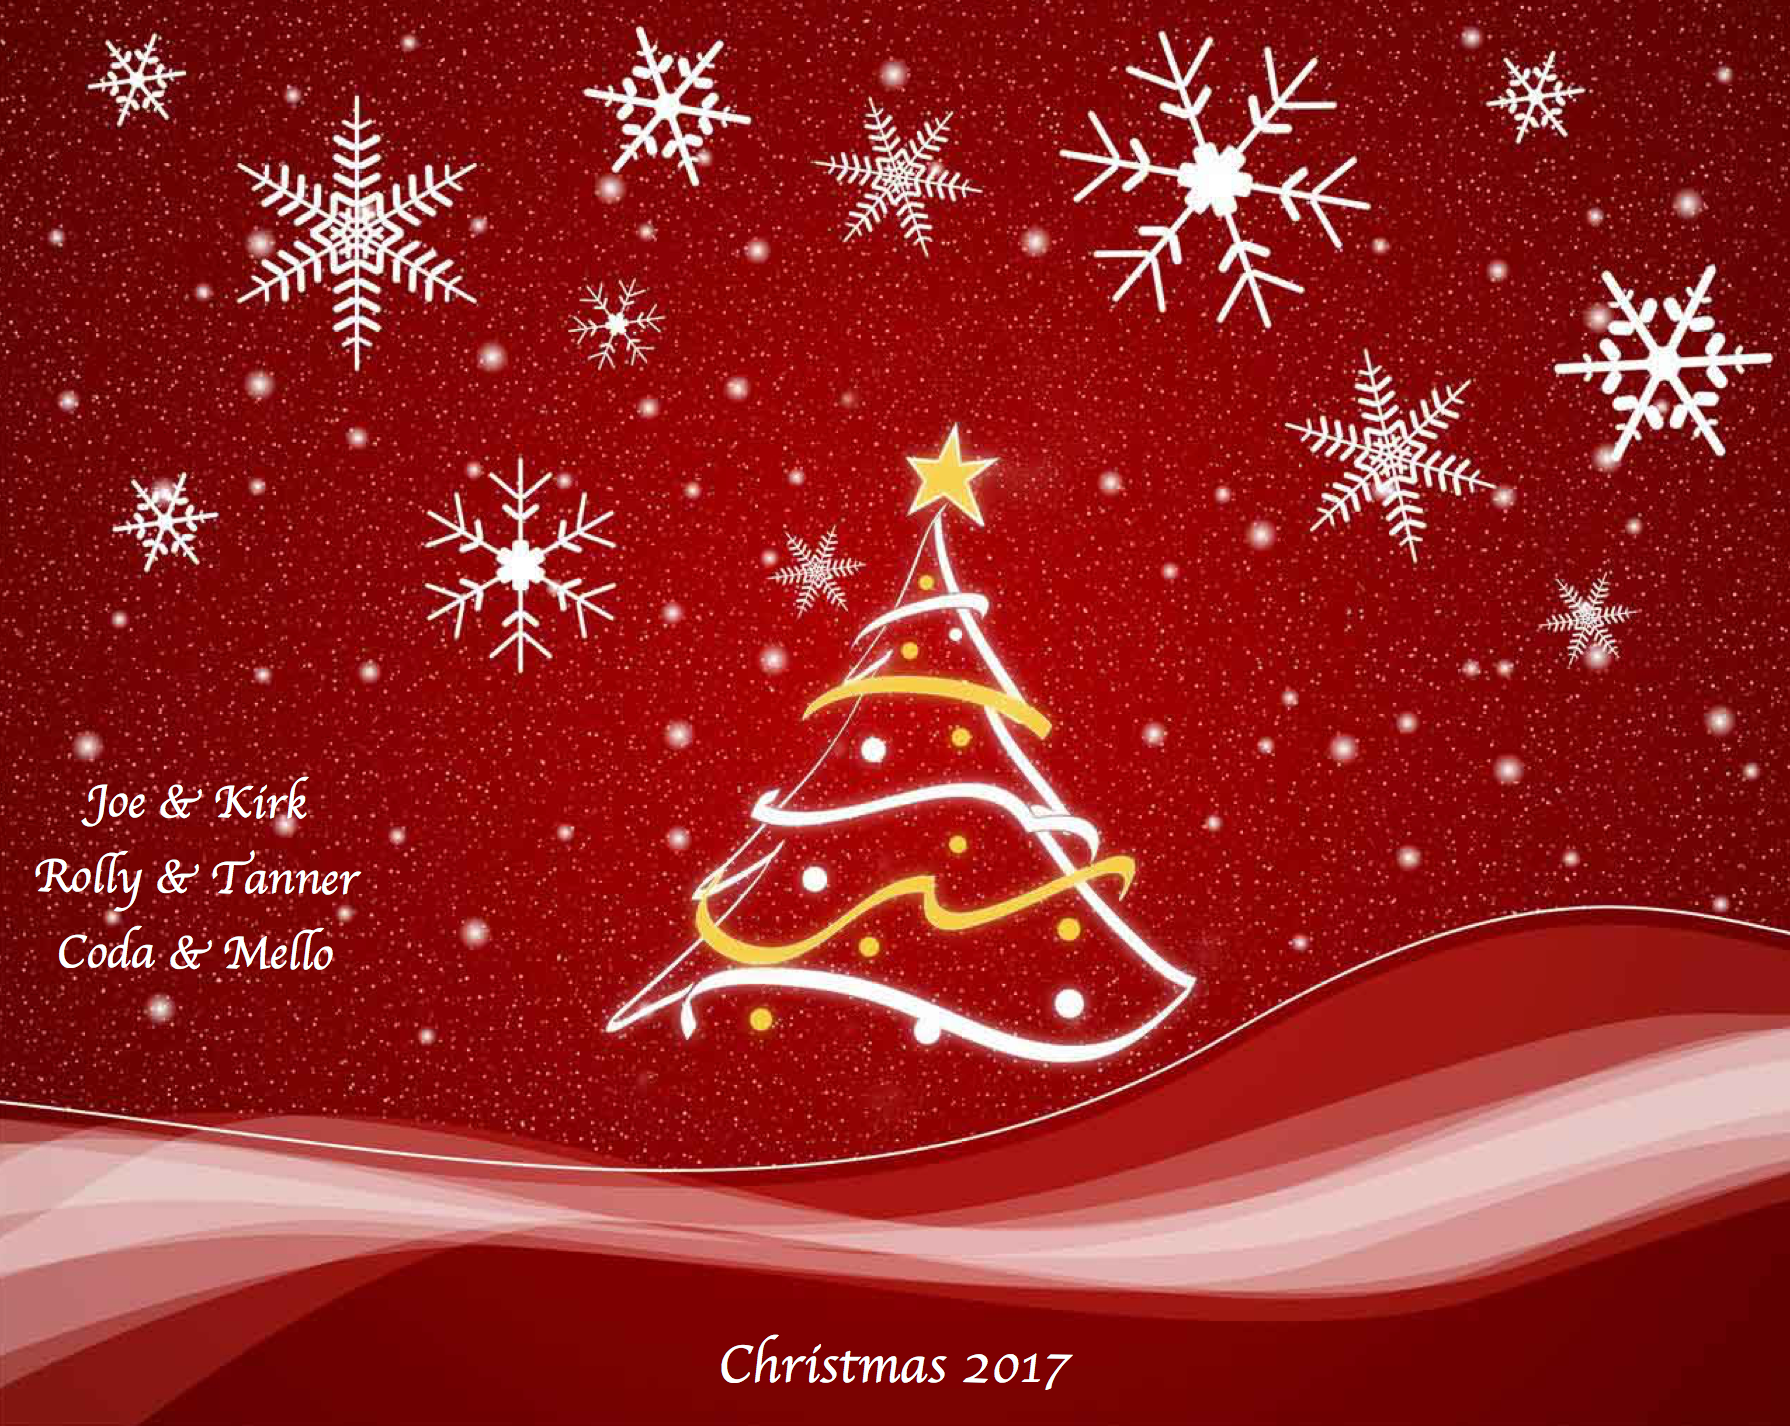 2017 Christmas card from Joe